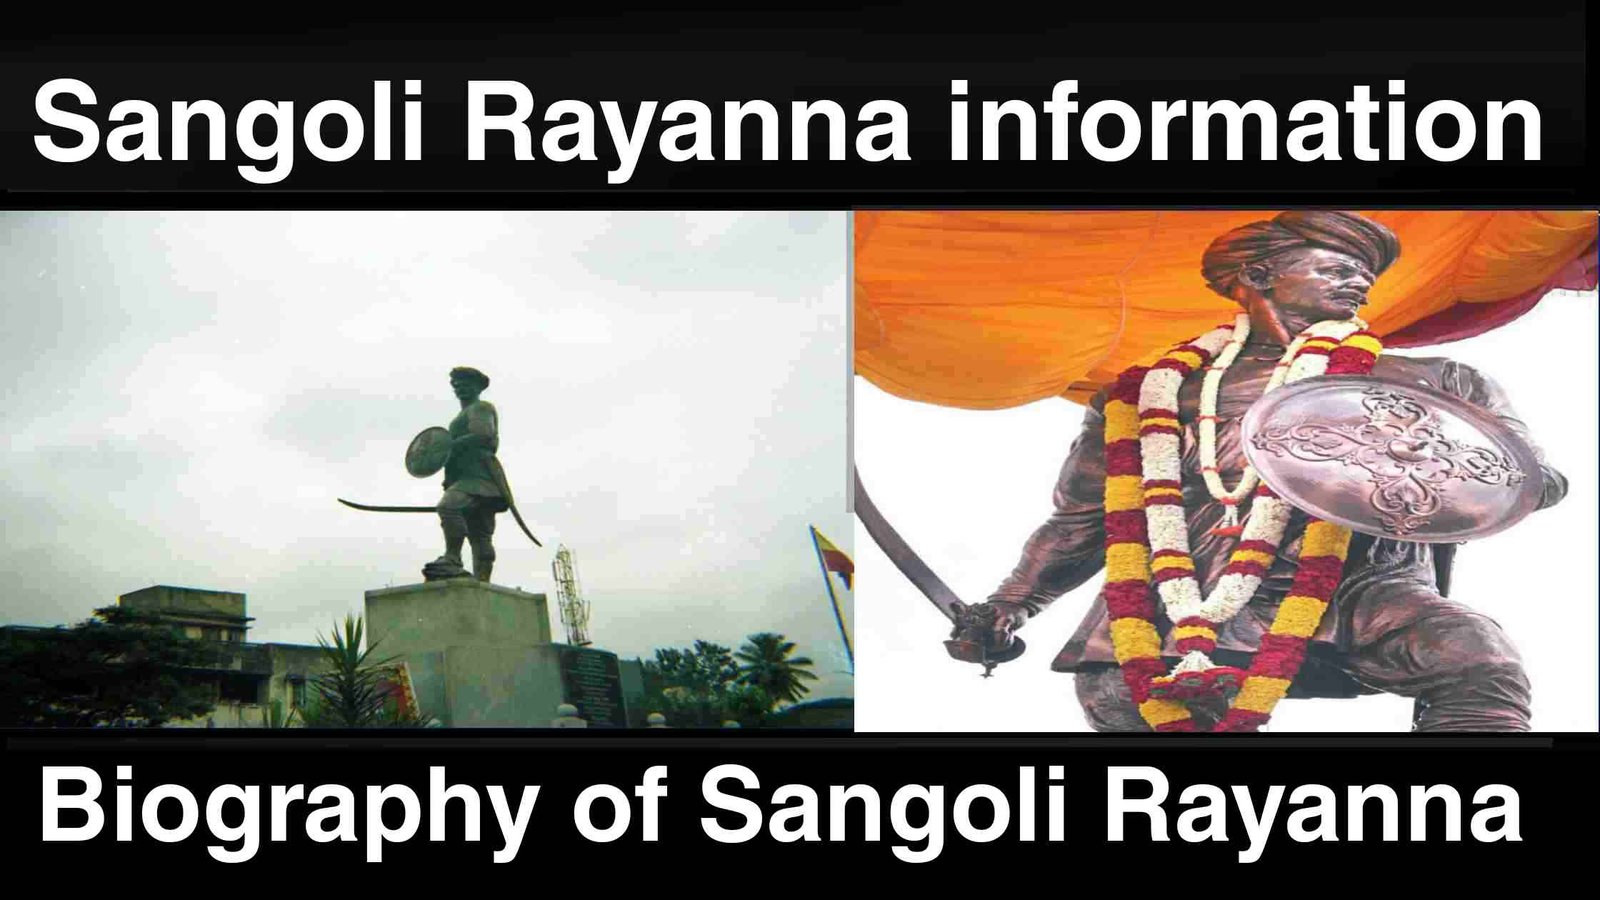 Sangoli Rayanna information